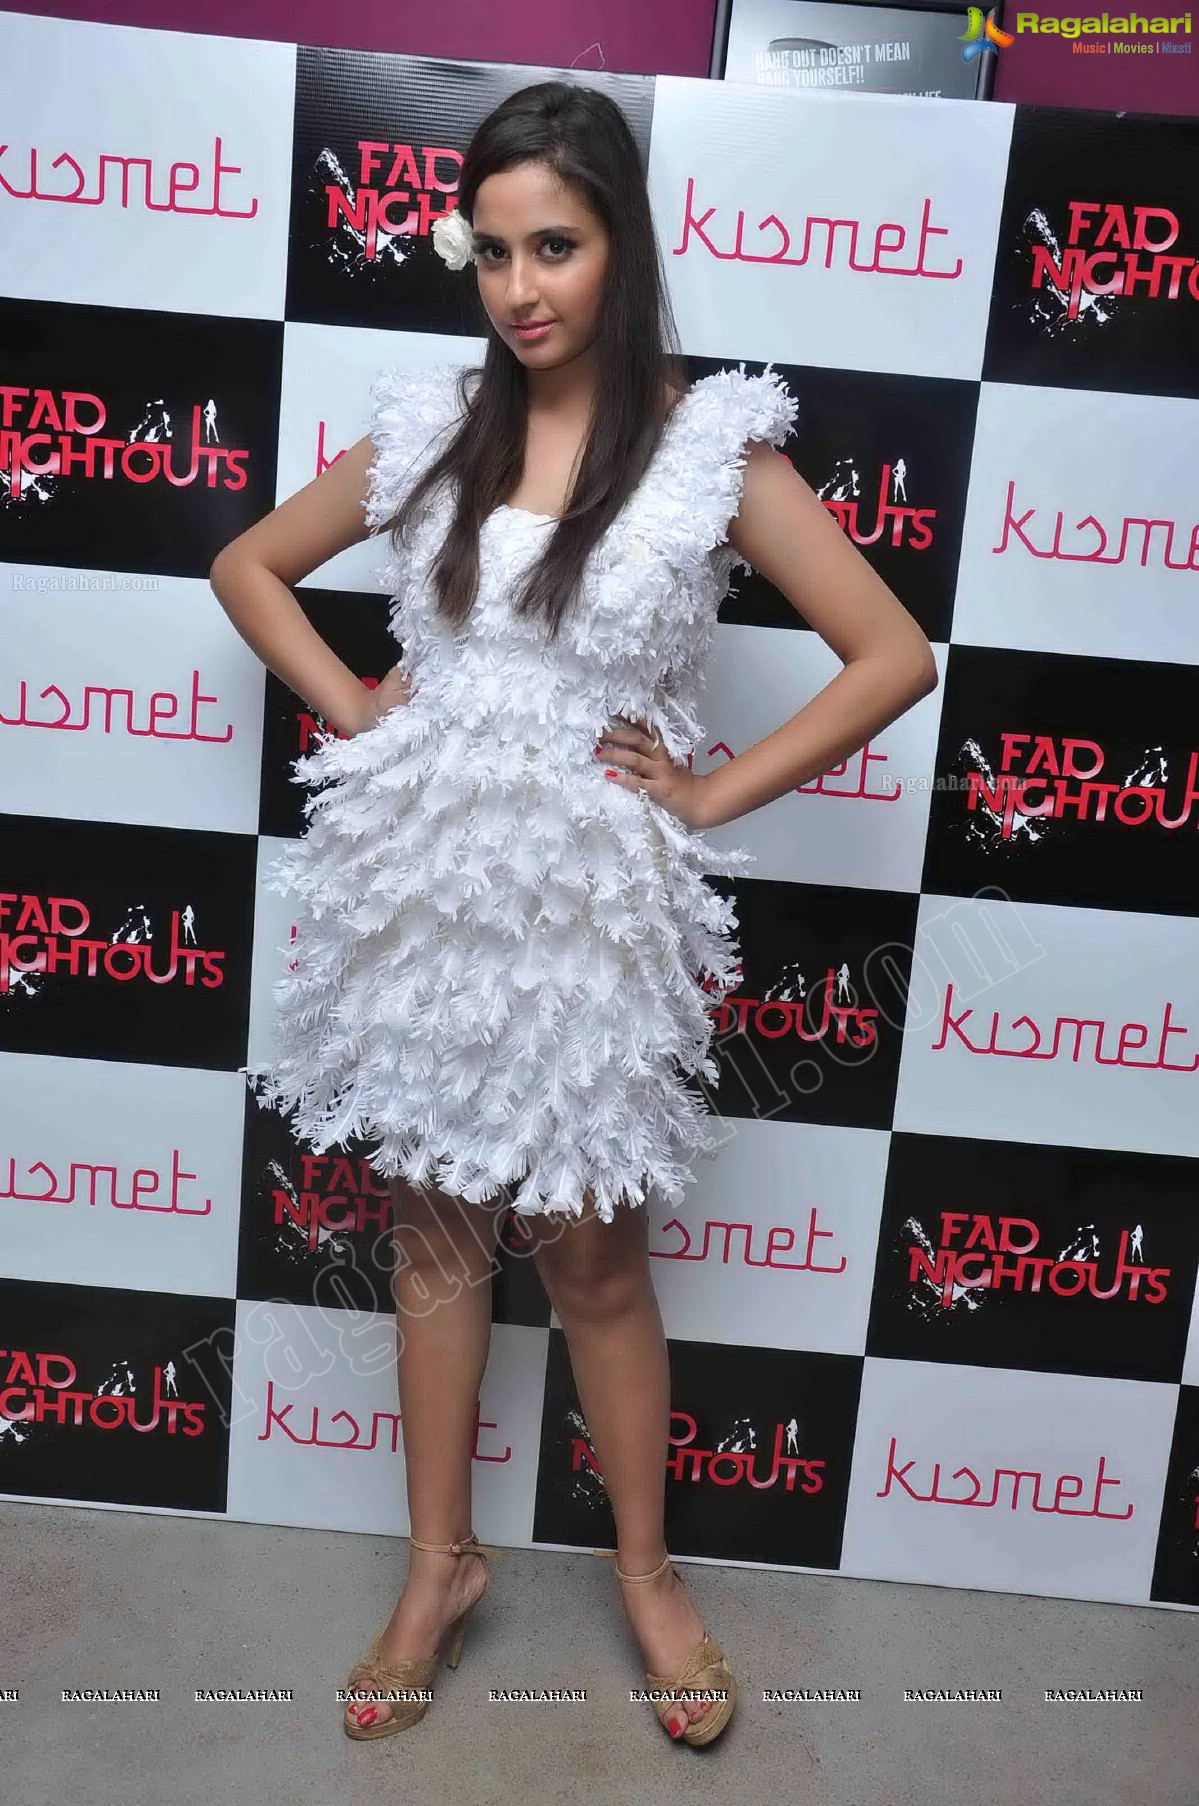 Fashion Show at Kismet Pub, Hyderabad